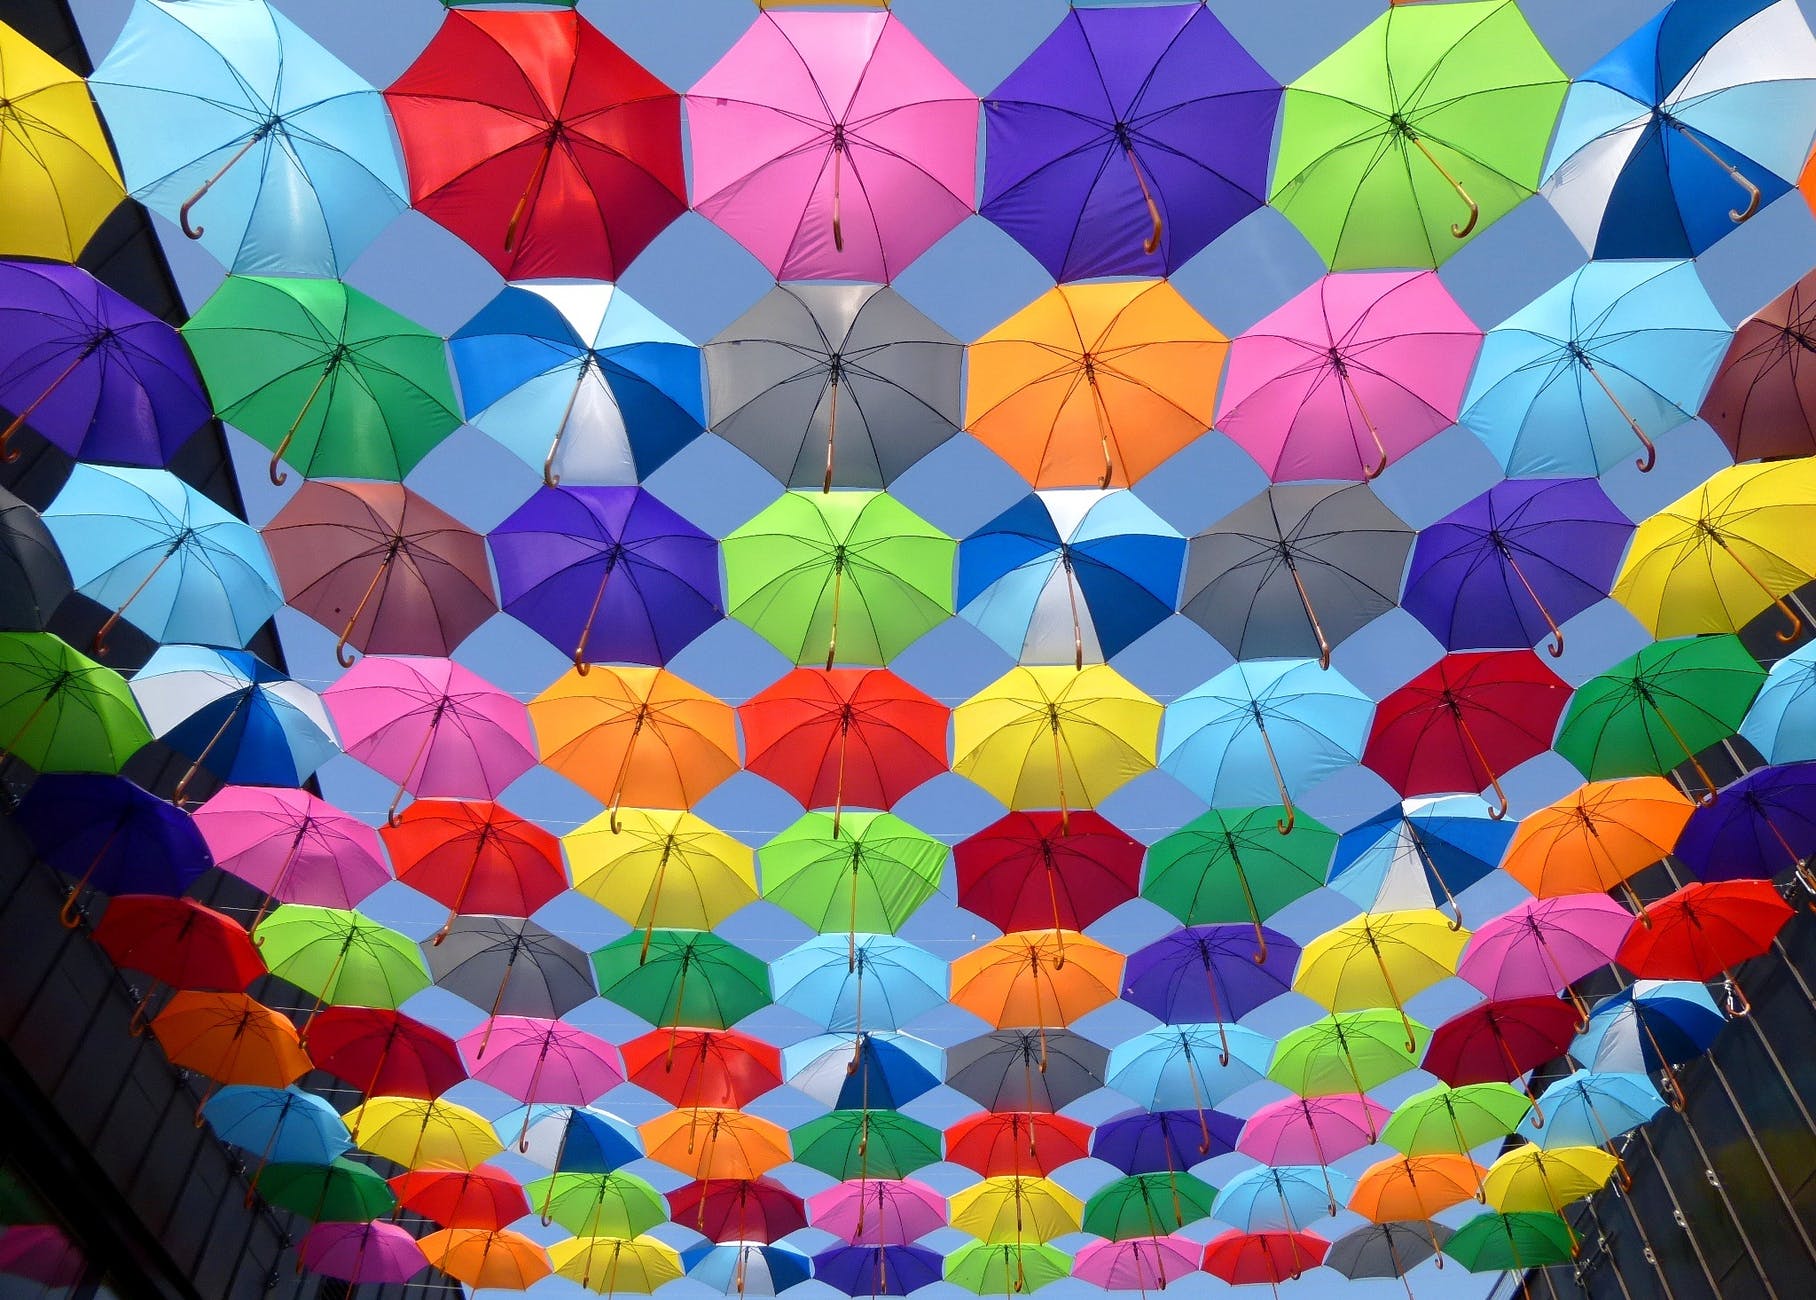 Umbrella insurance helped save me money.